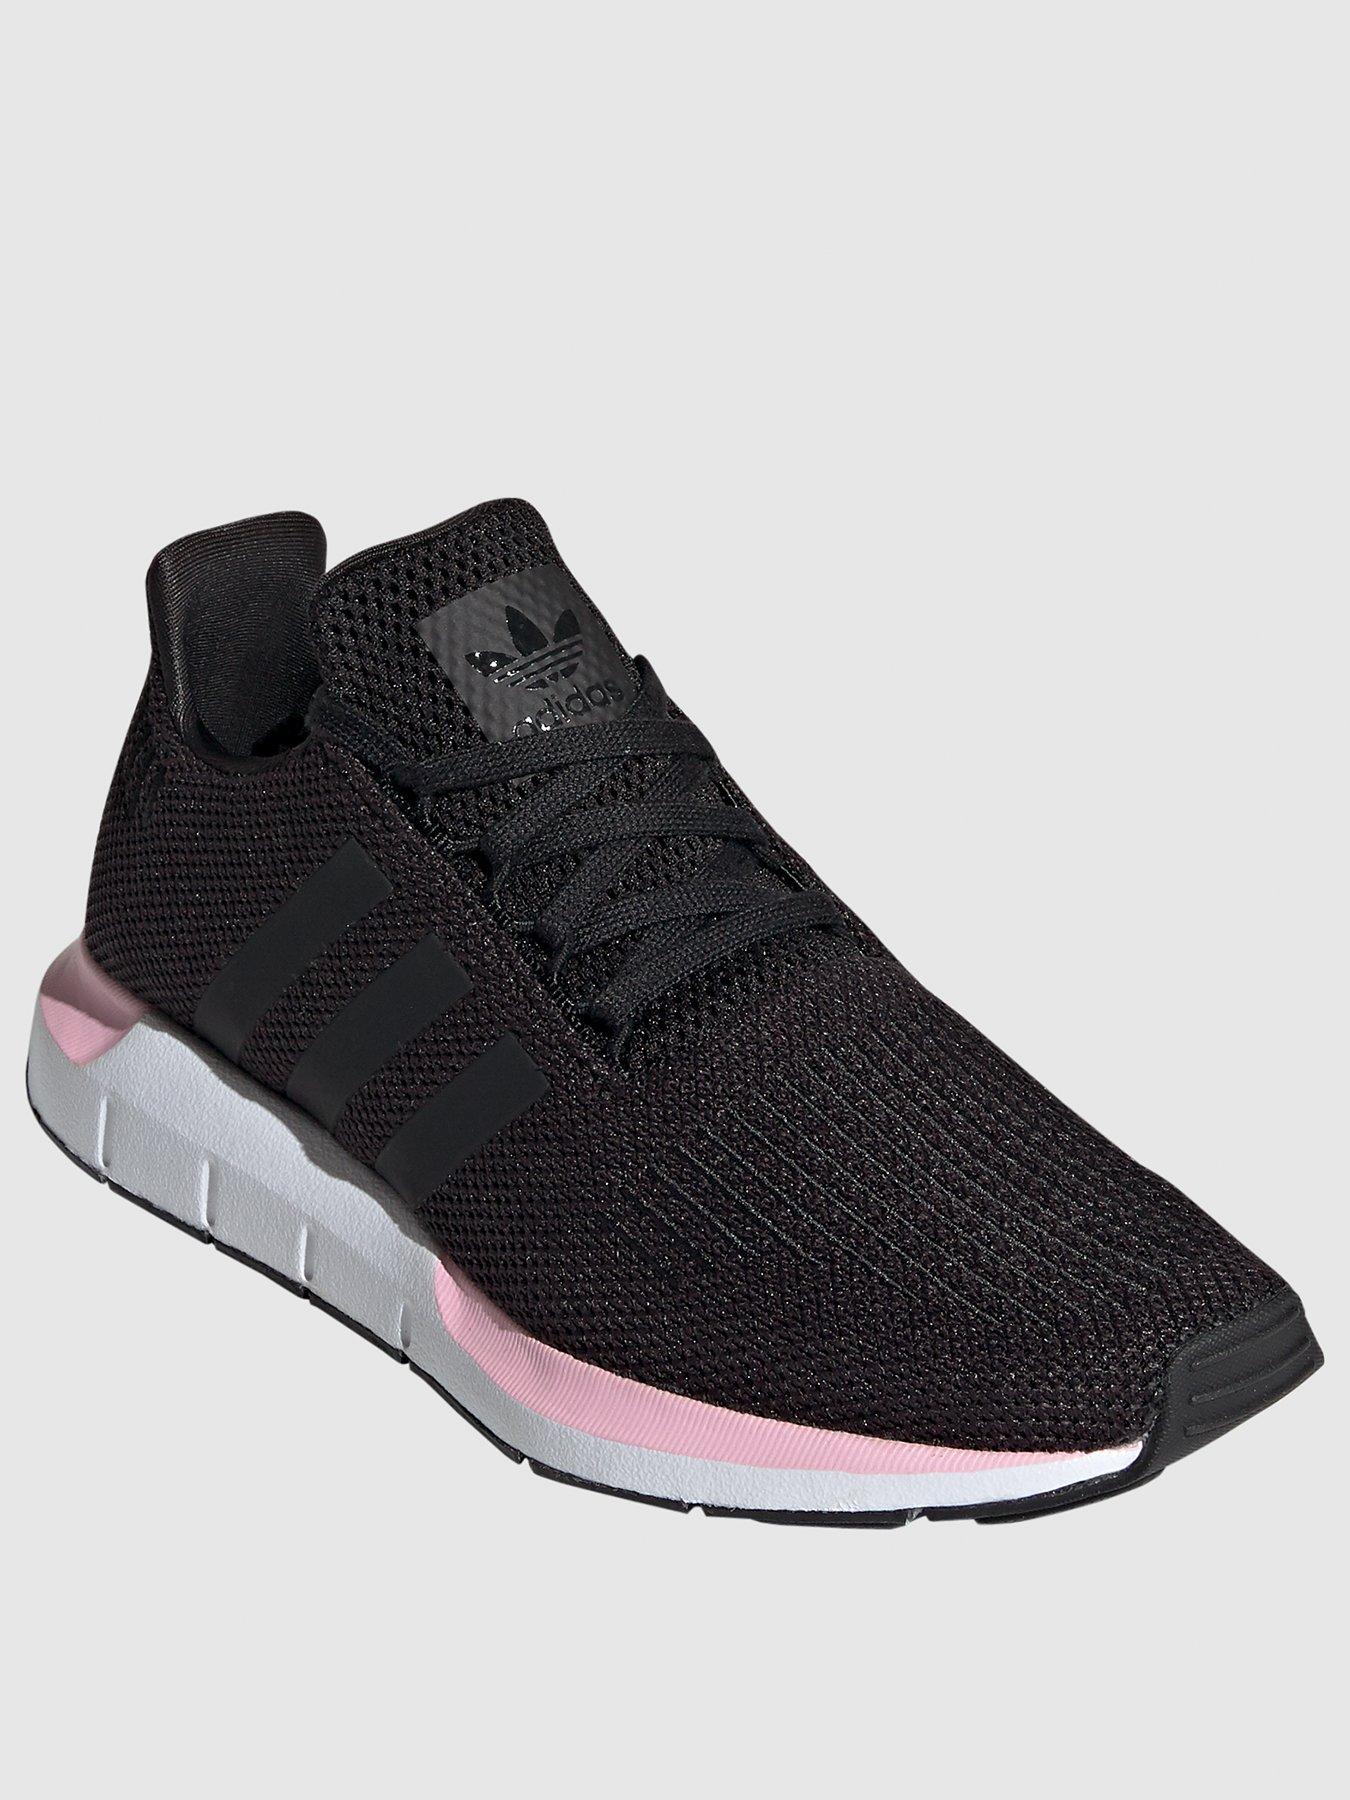 adidas swift run shoes pink